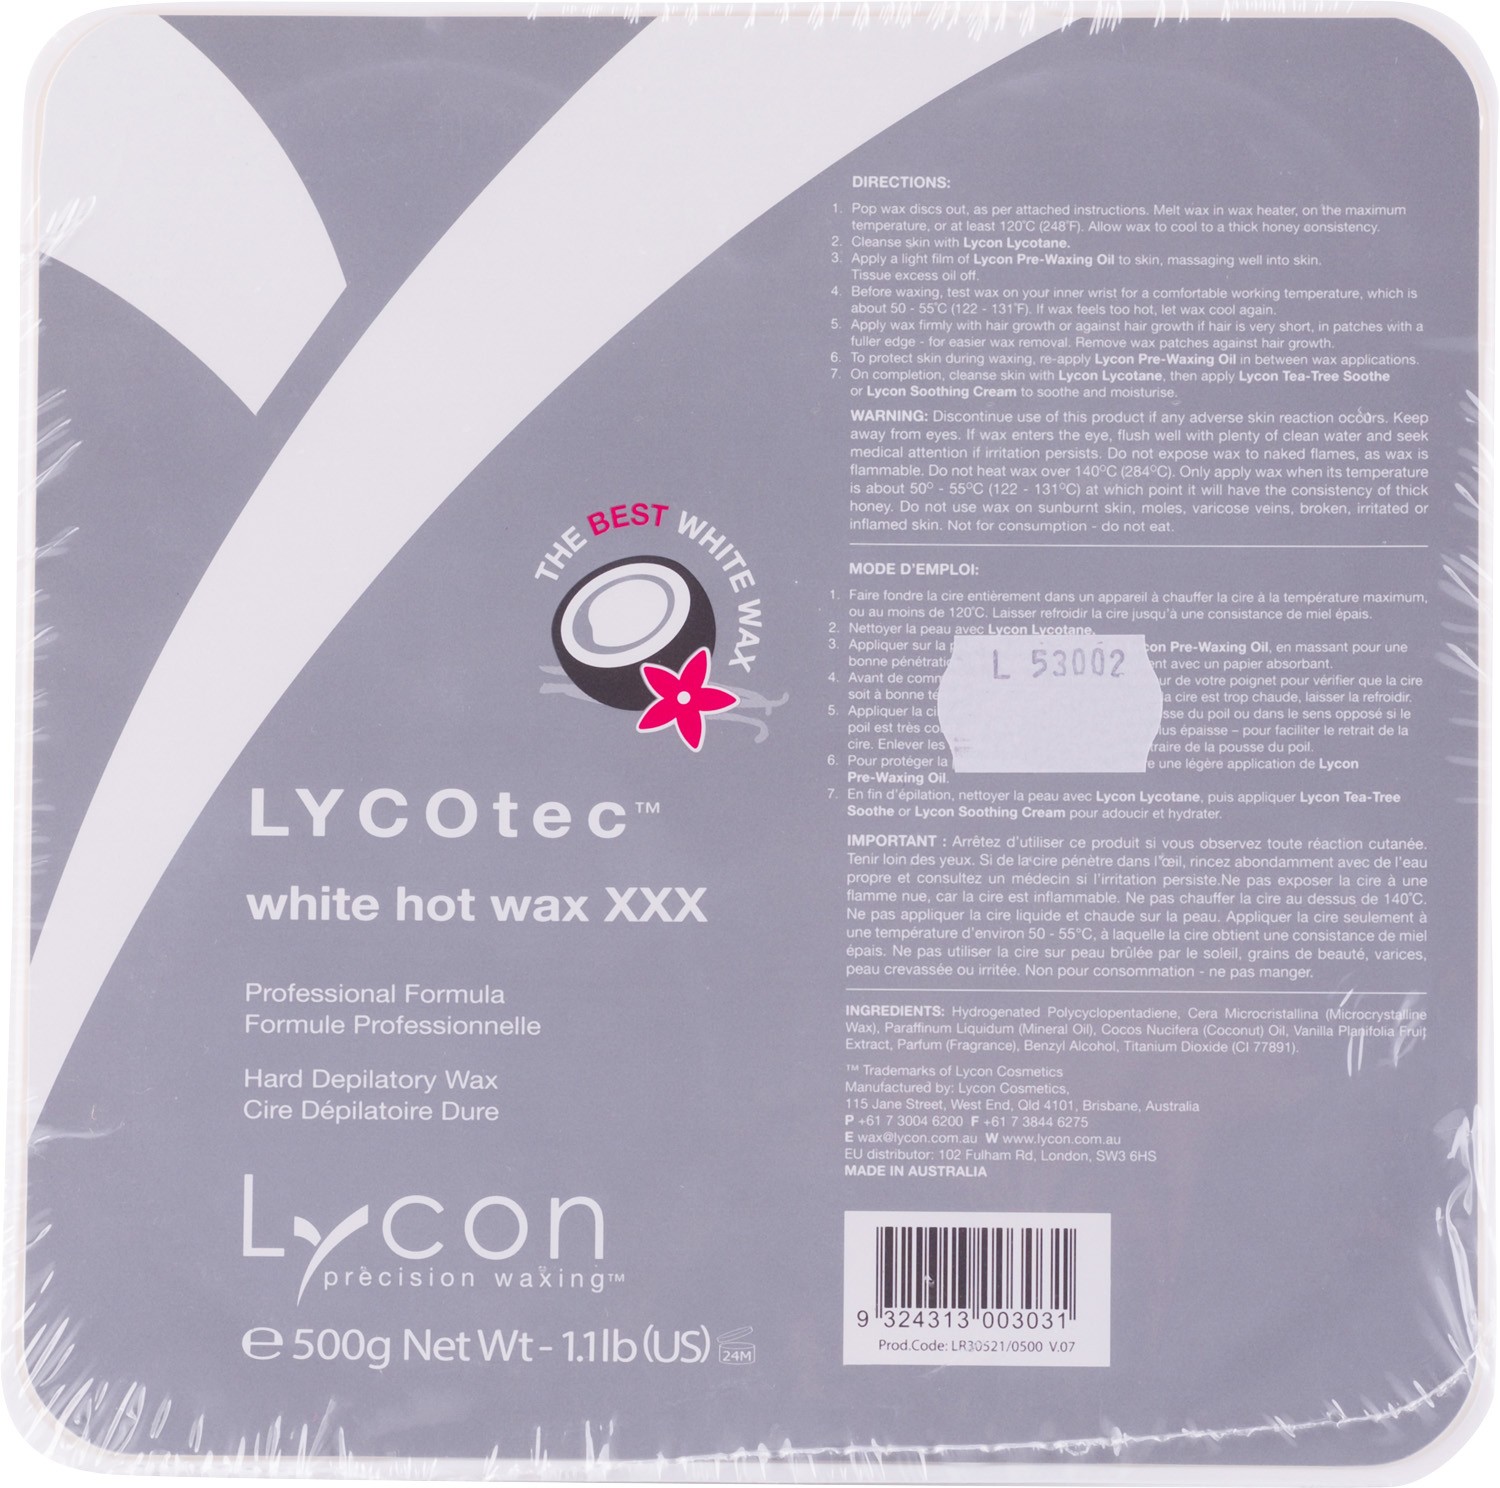 Lycotec White Hot Wax Lycon 500g Hbp Padstow 9833